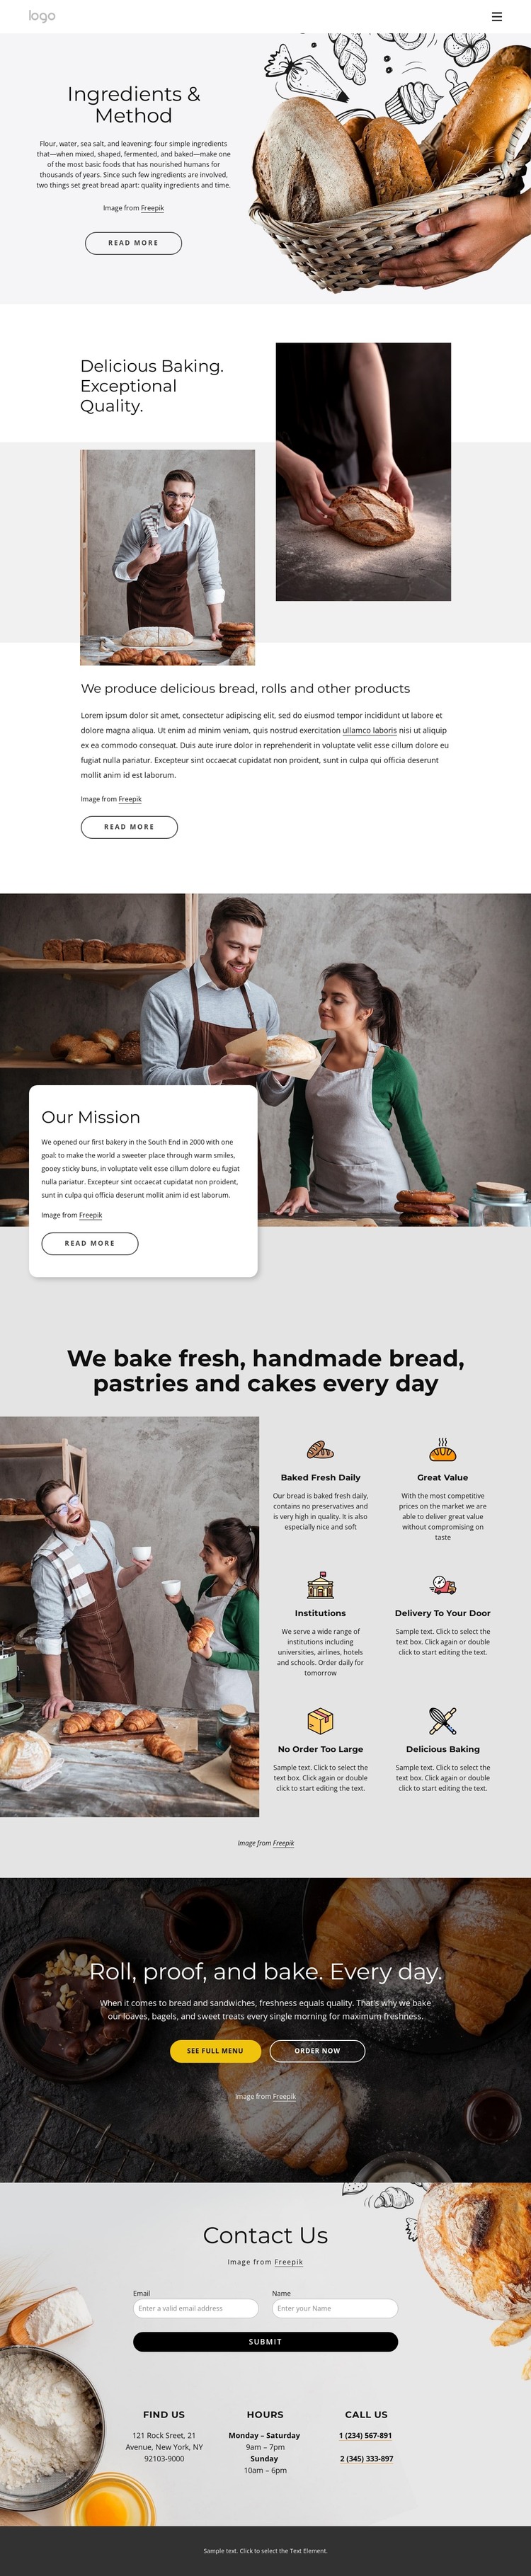 We bake handmade bread Web Design